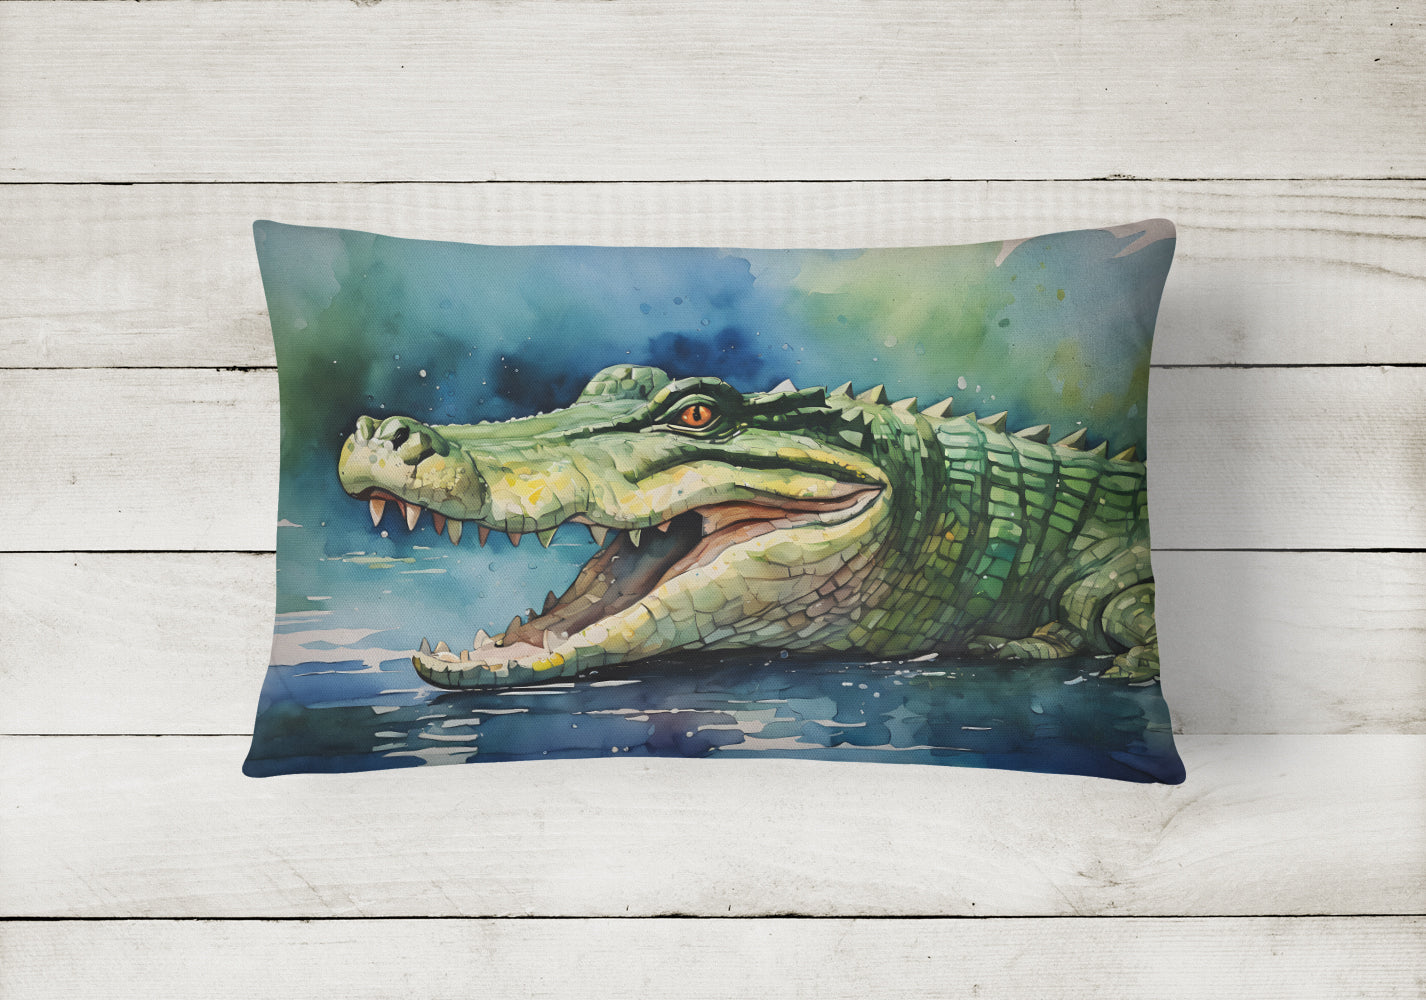 Crocodile Throw Pillow